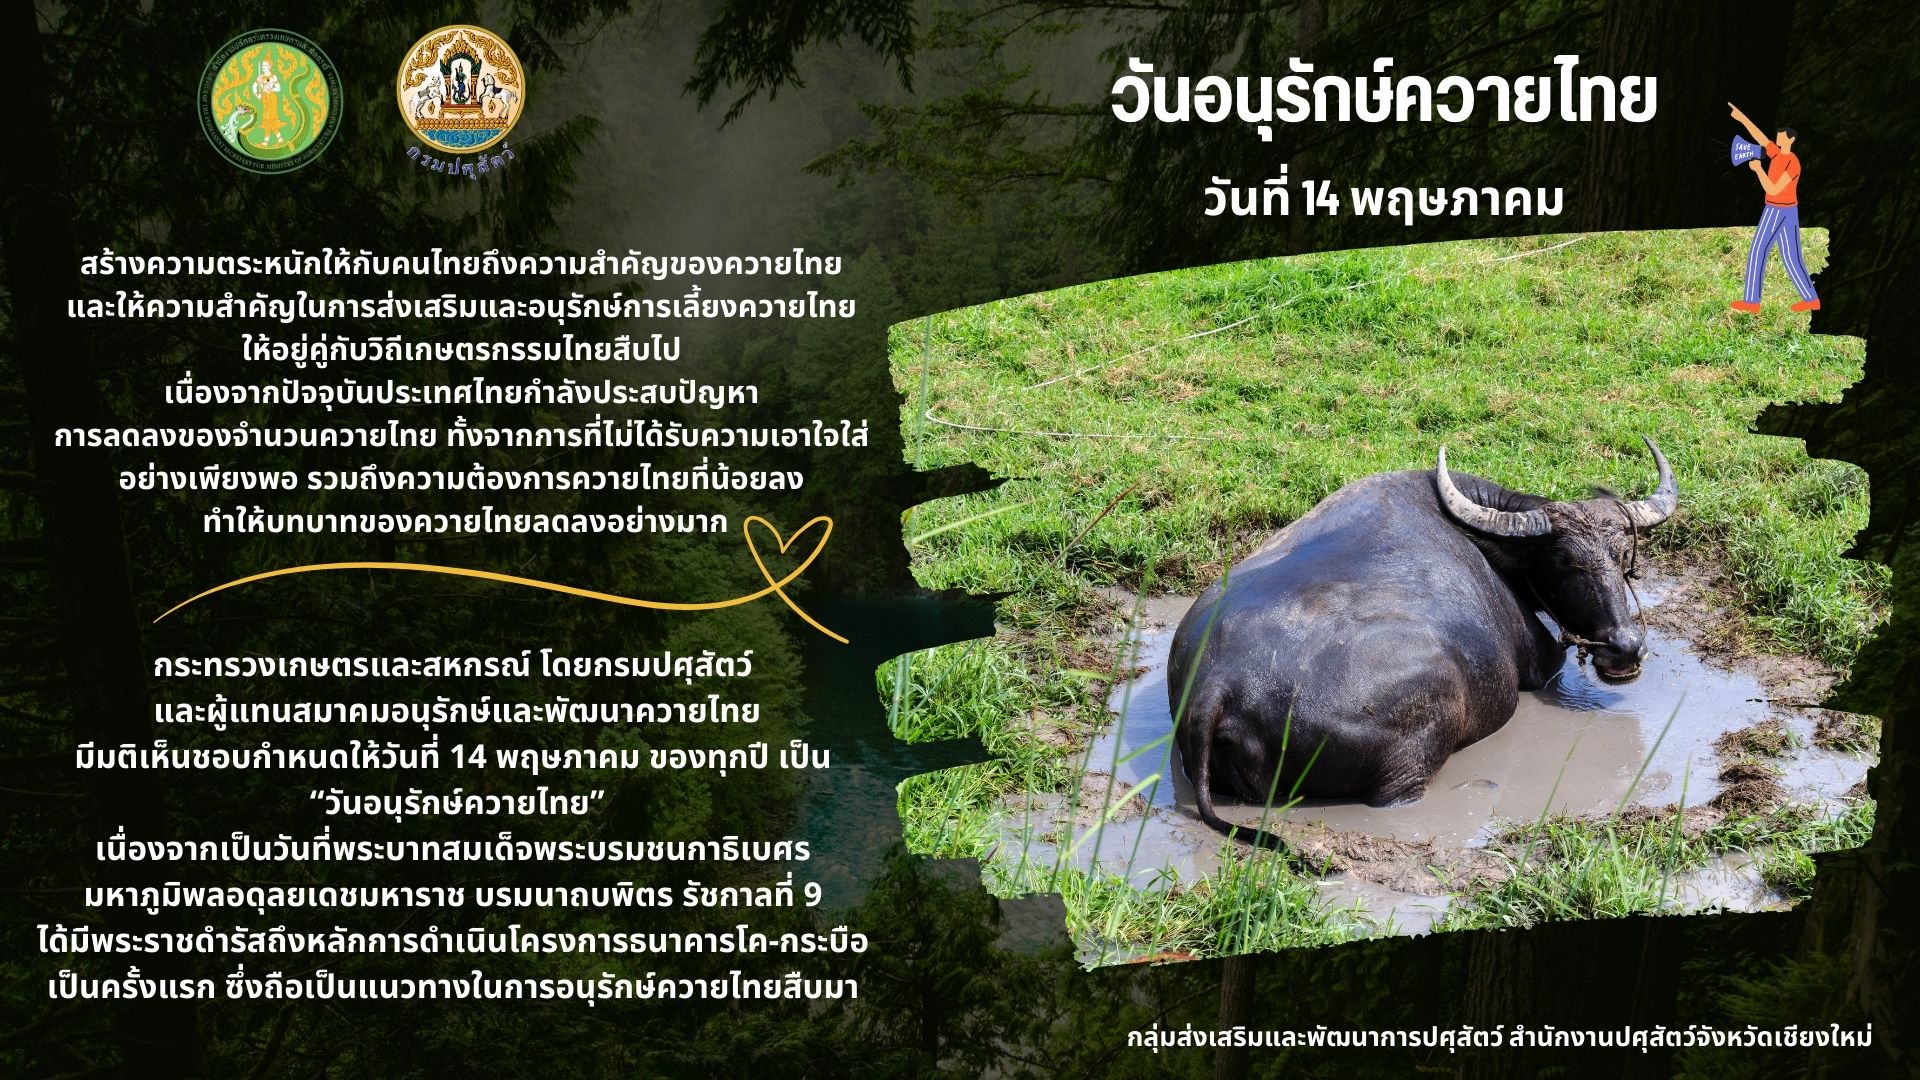 Thai Buffalo Day